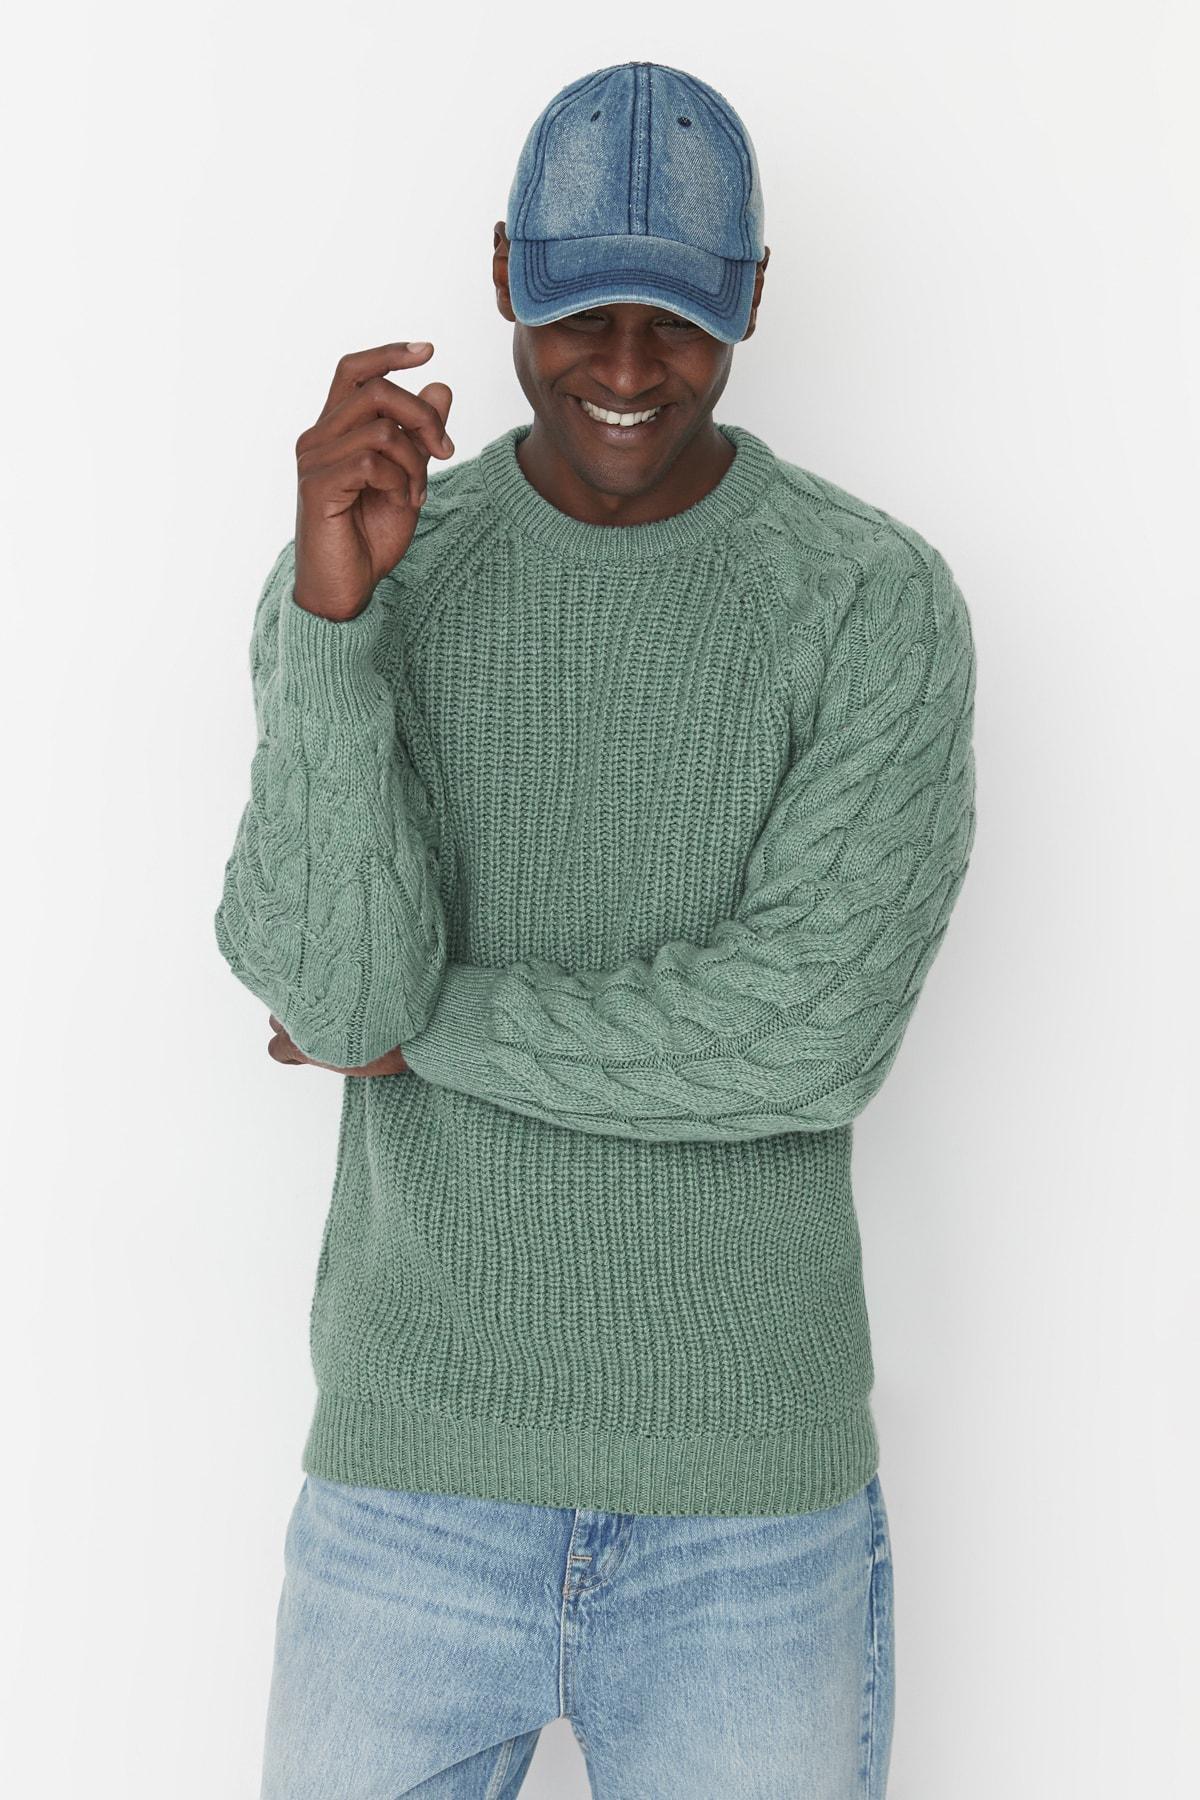 Trendyol - Green Crew Neck Sweater